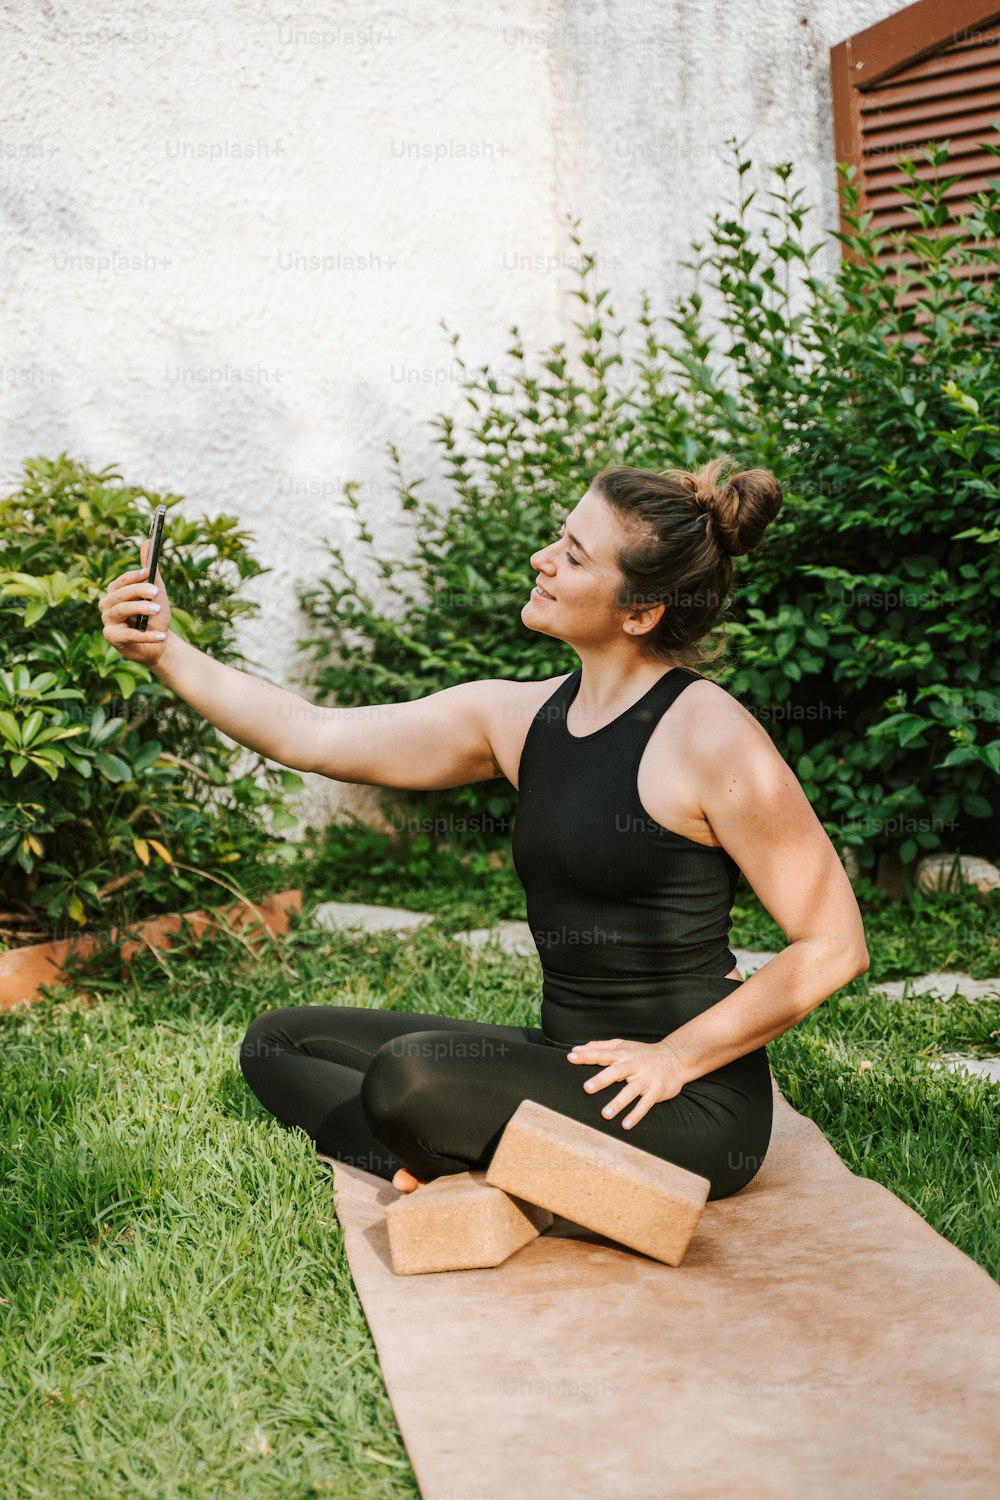 a woman sitting on a yoga mat taking a selfie